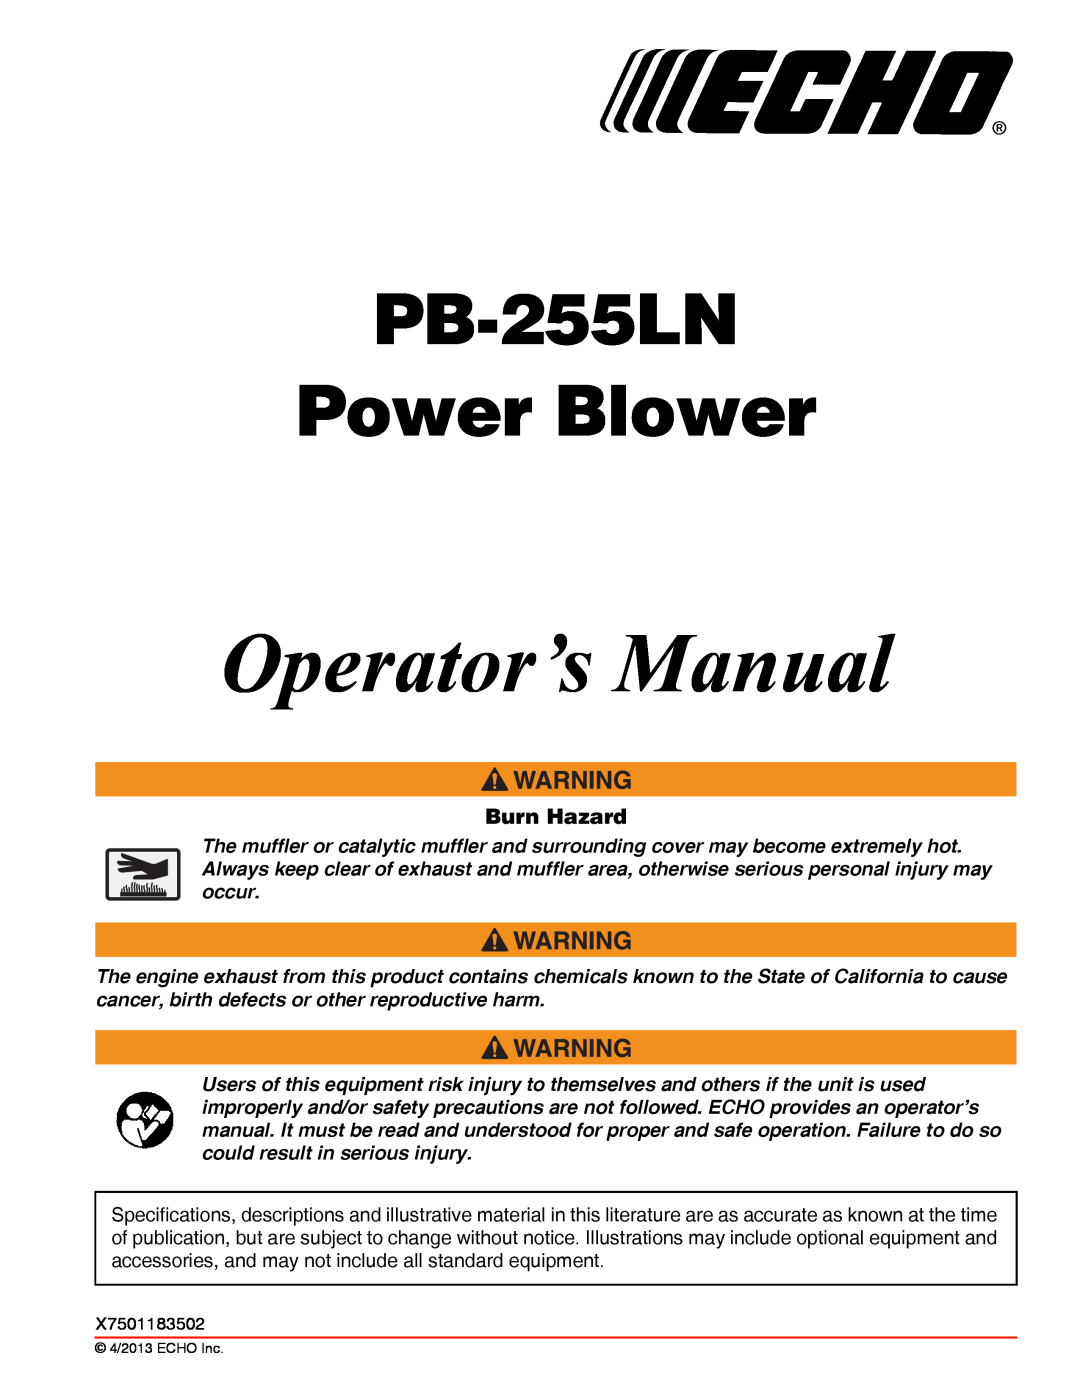 Echo specifications Burn Hazard, Operator’s Manual, PB-255LN Power Blower 